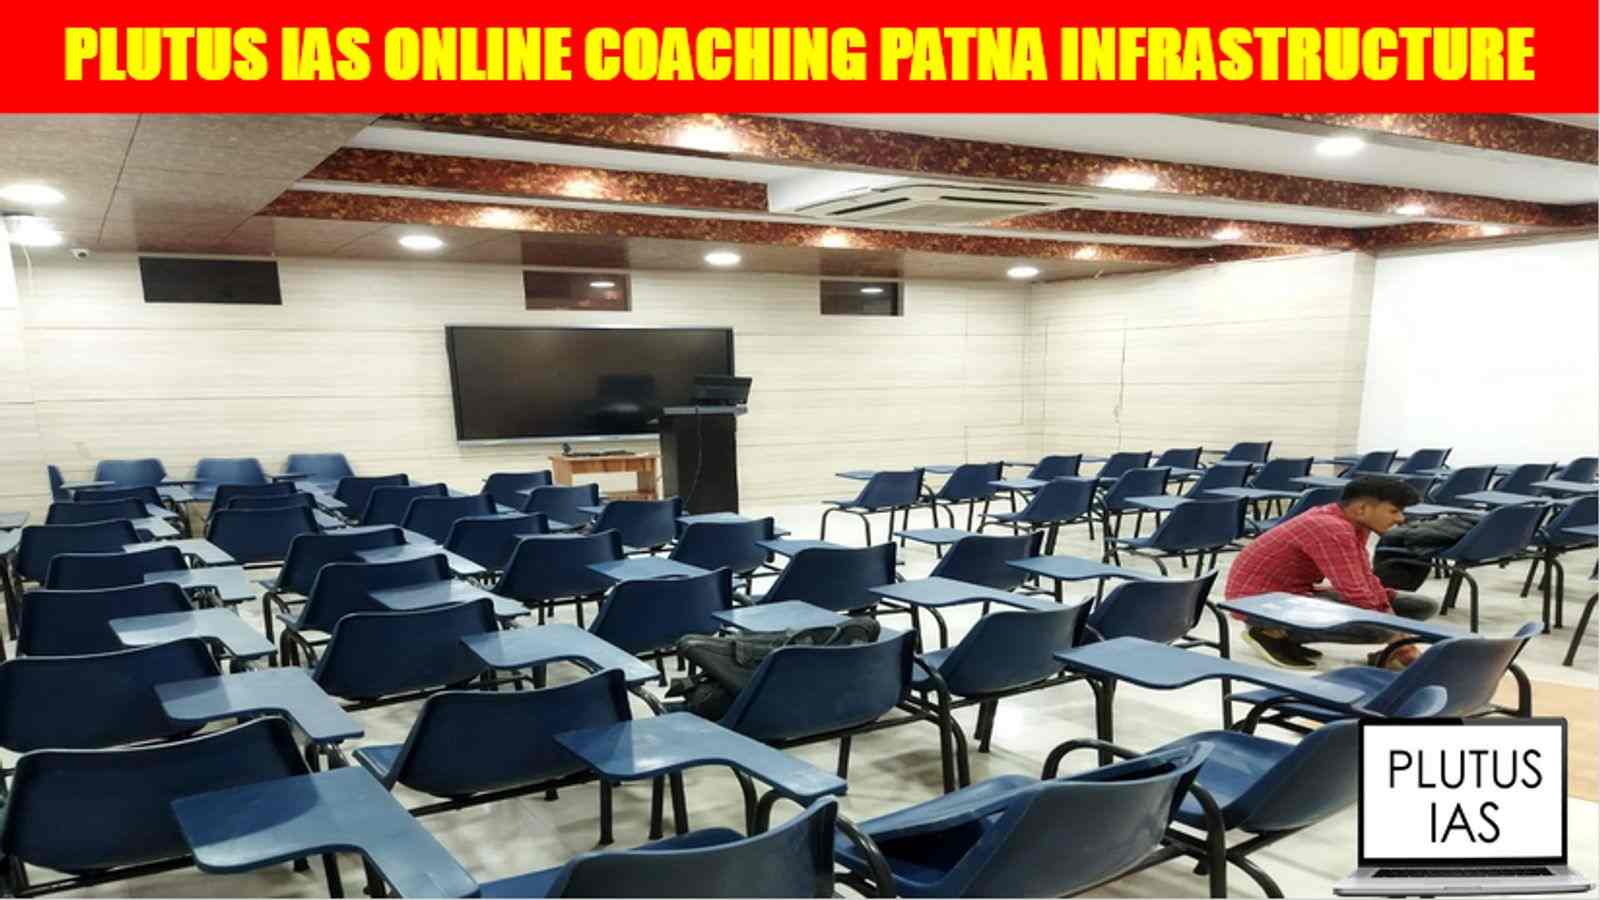 Plutus IAS Online Coaching Patna Infrastructure